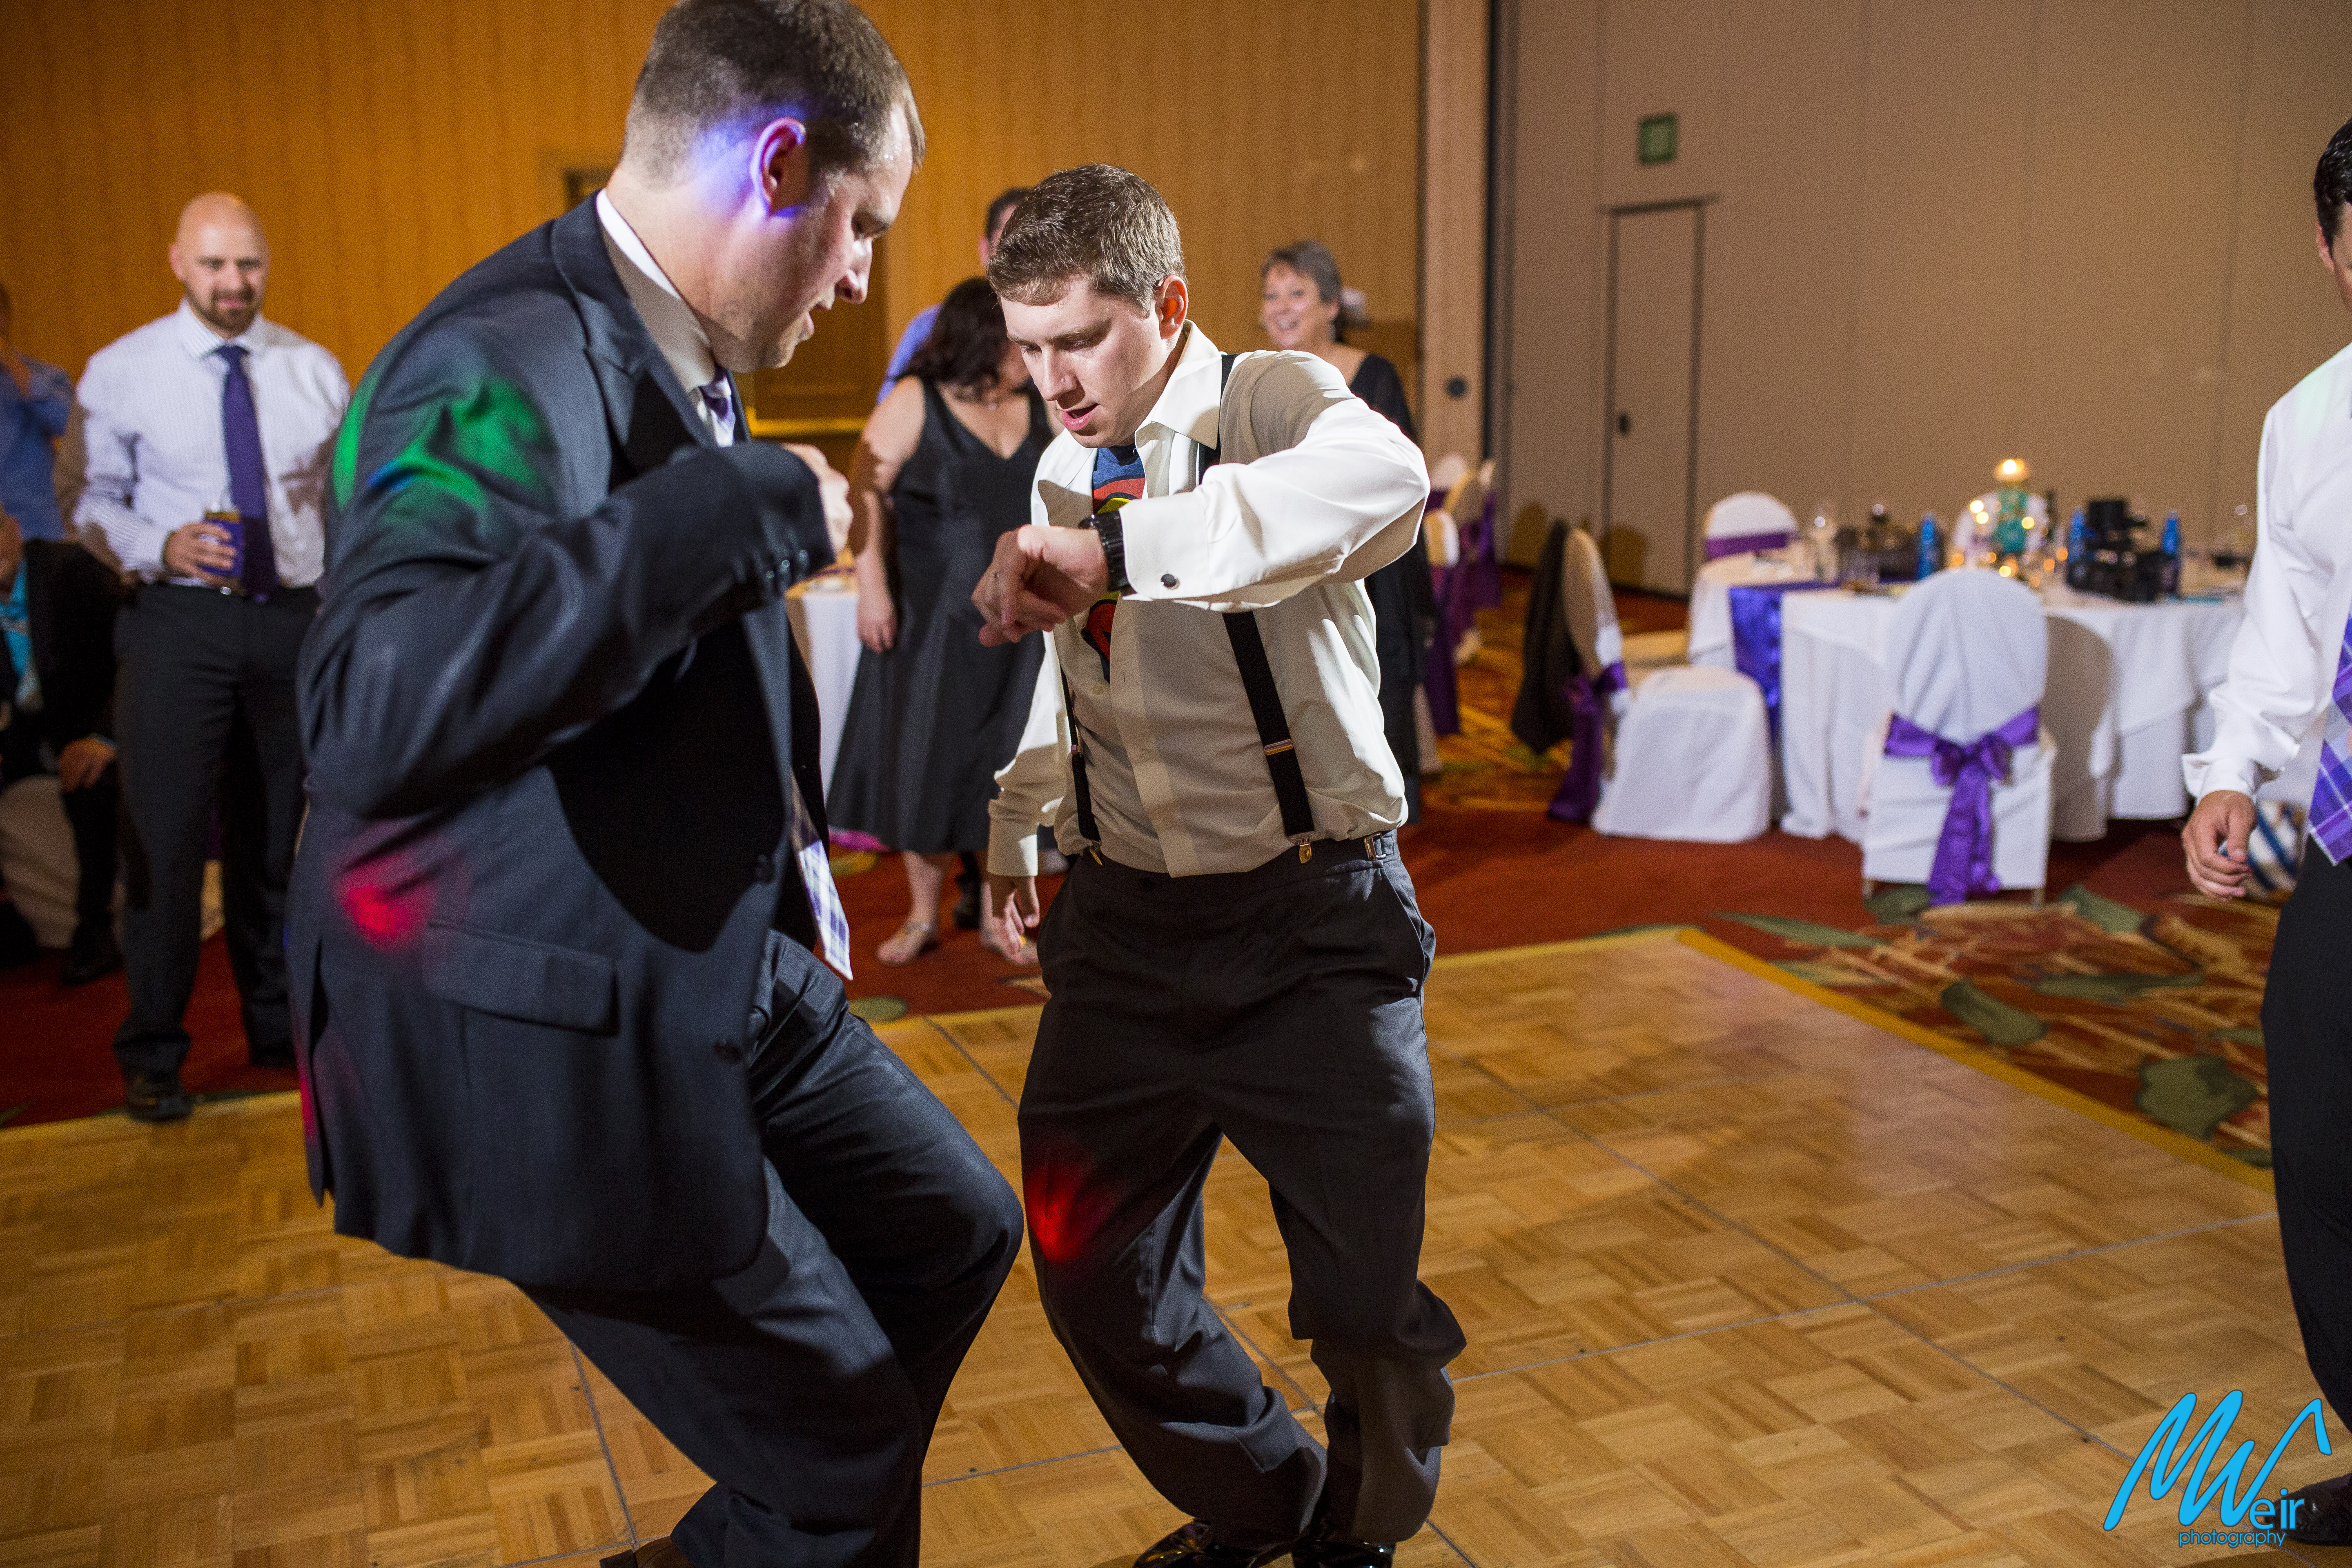 groom and groomsman intense dancing during wedding reception